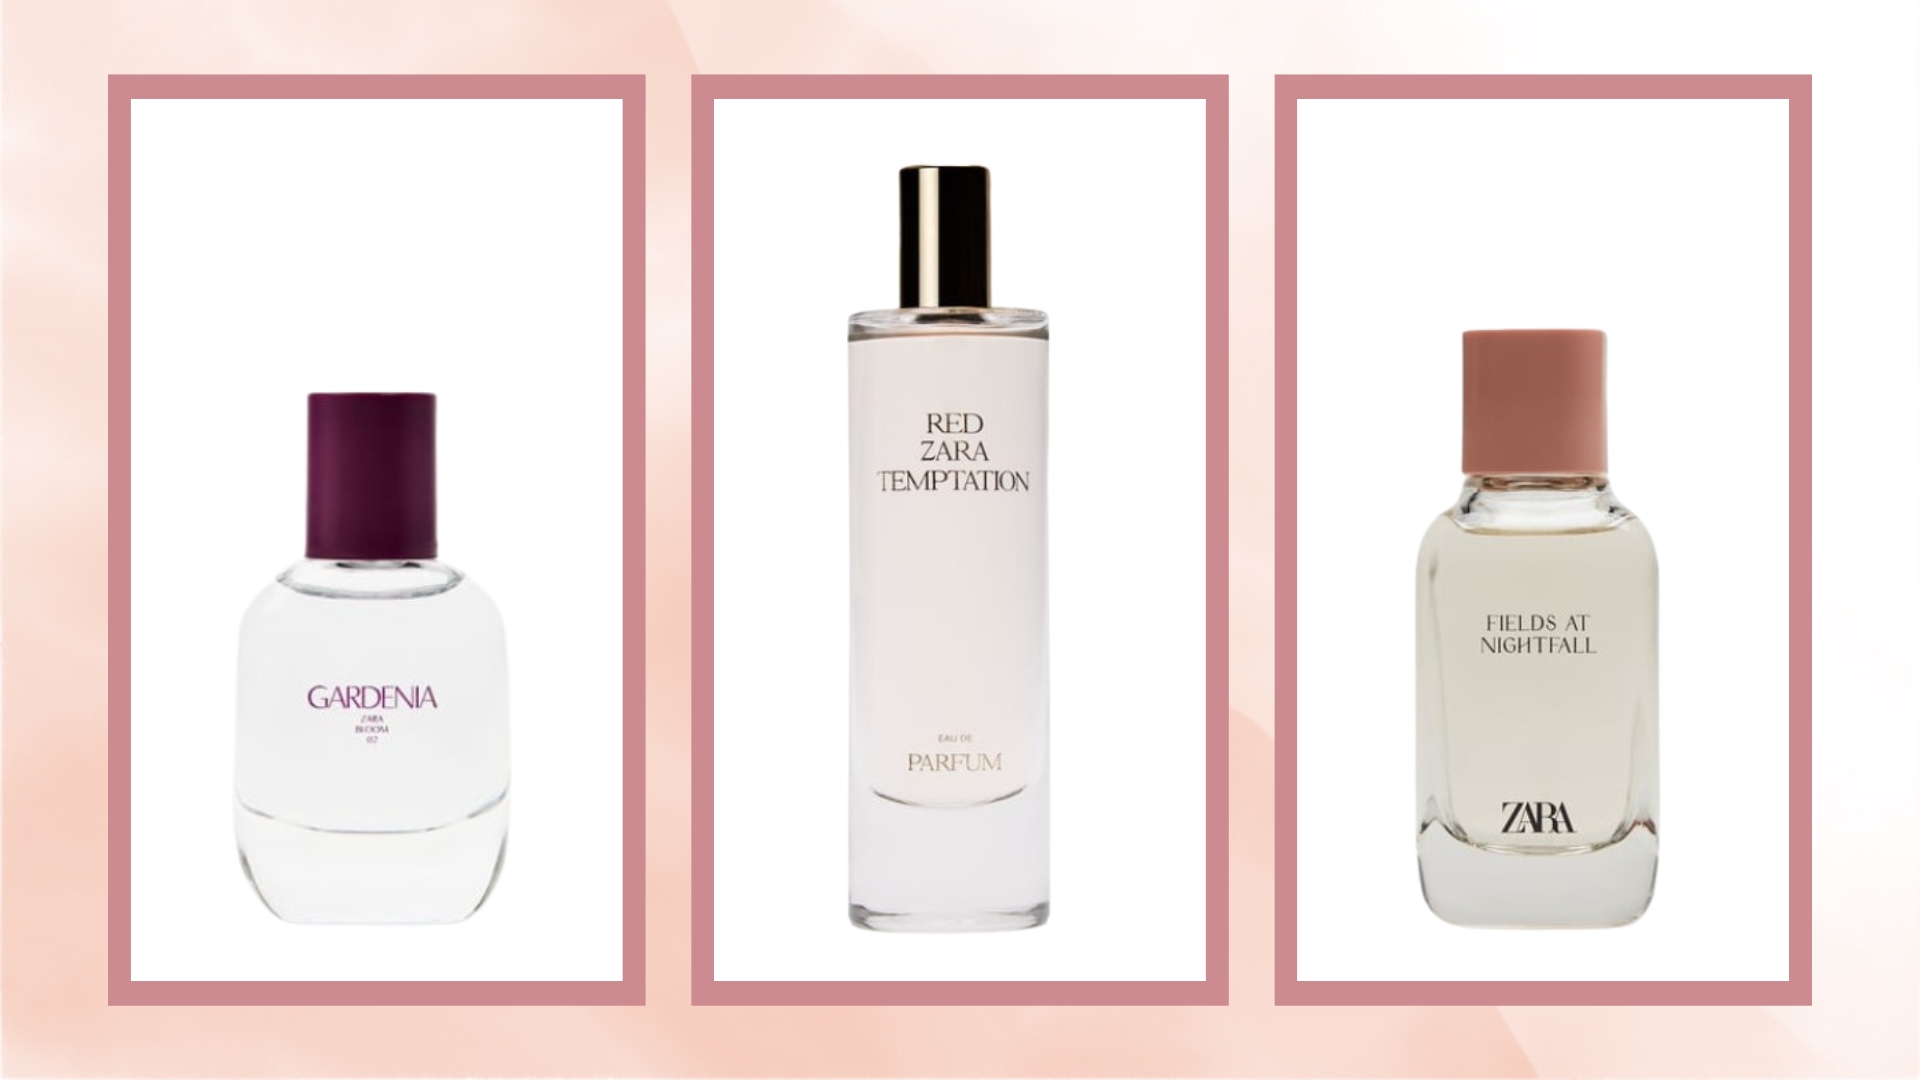 Femme Zara perfume - a fragrance for women